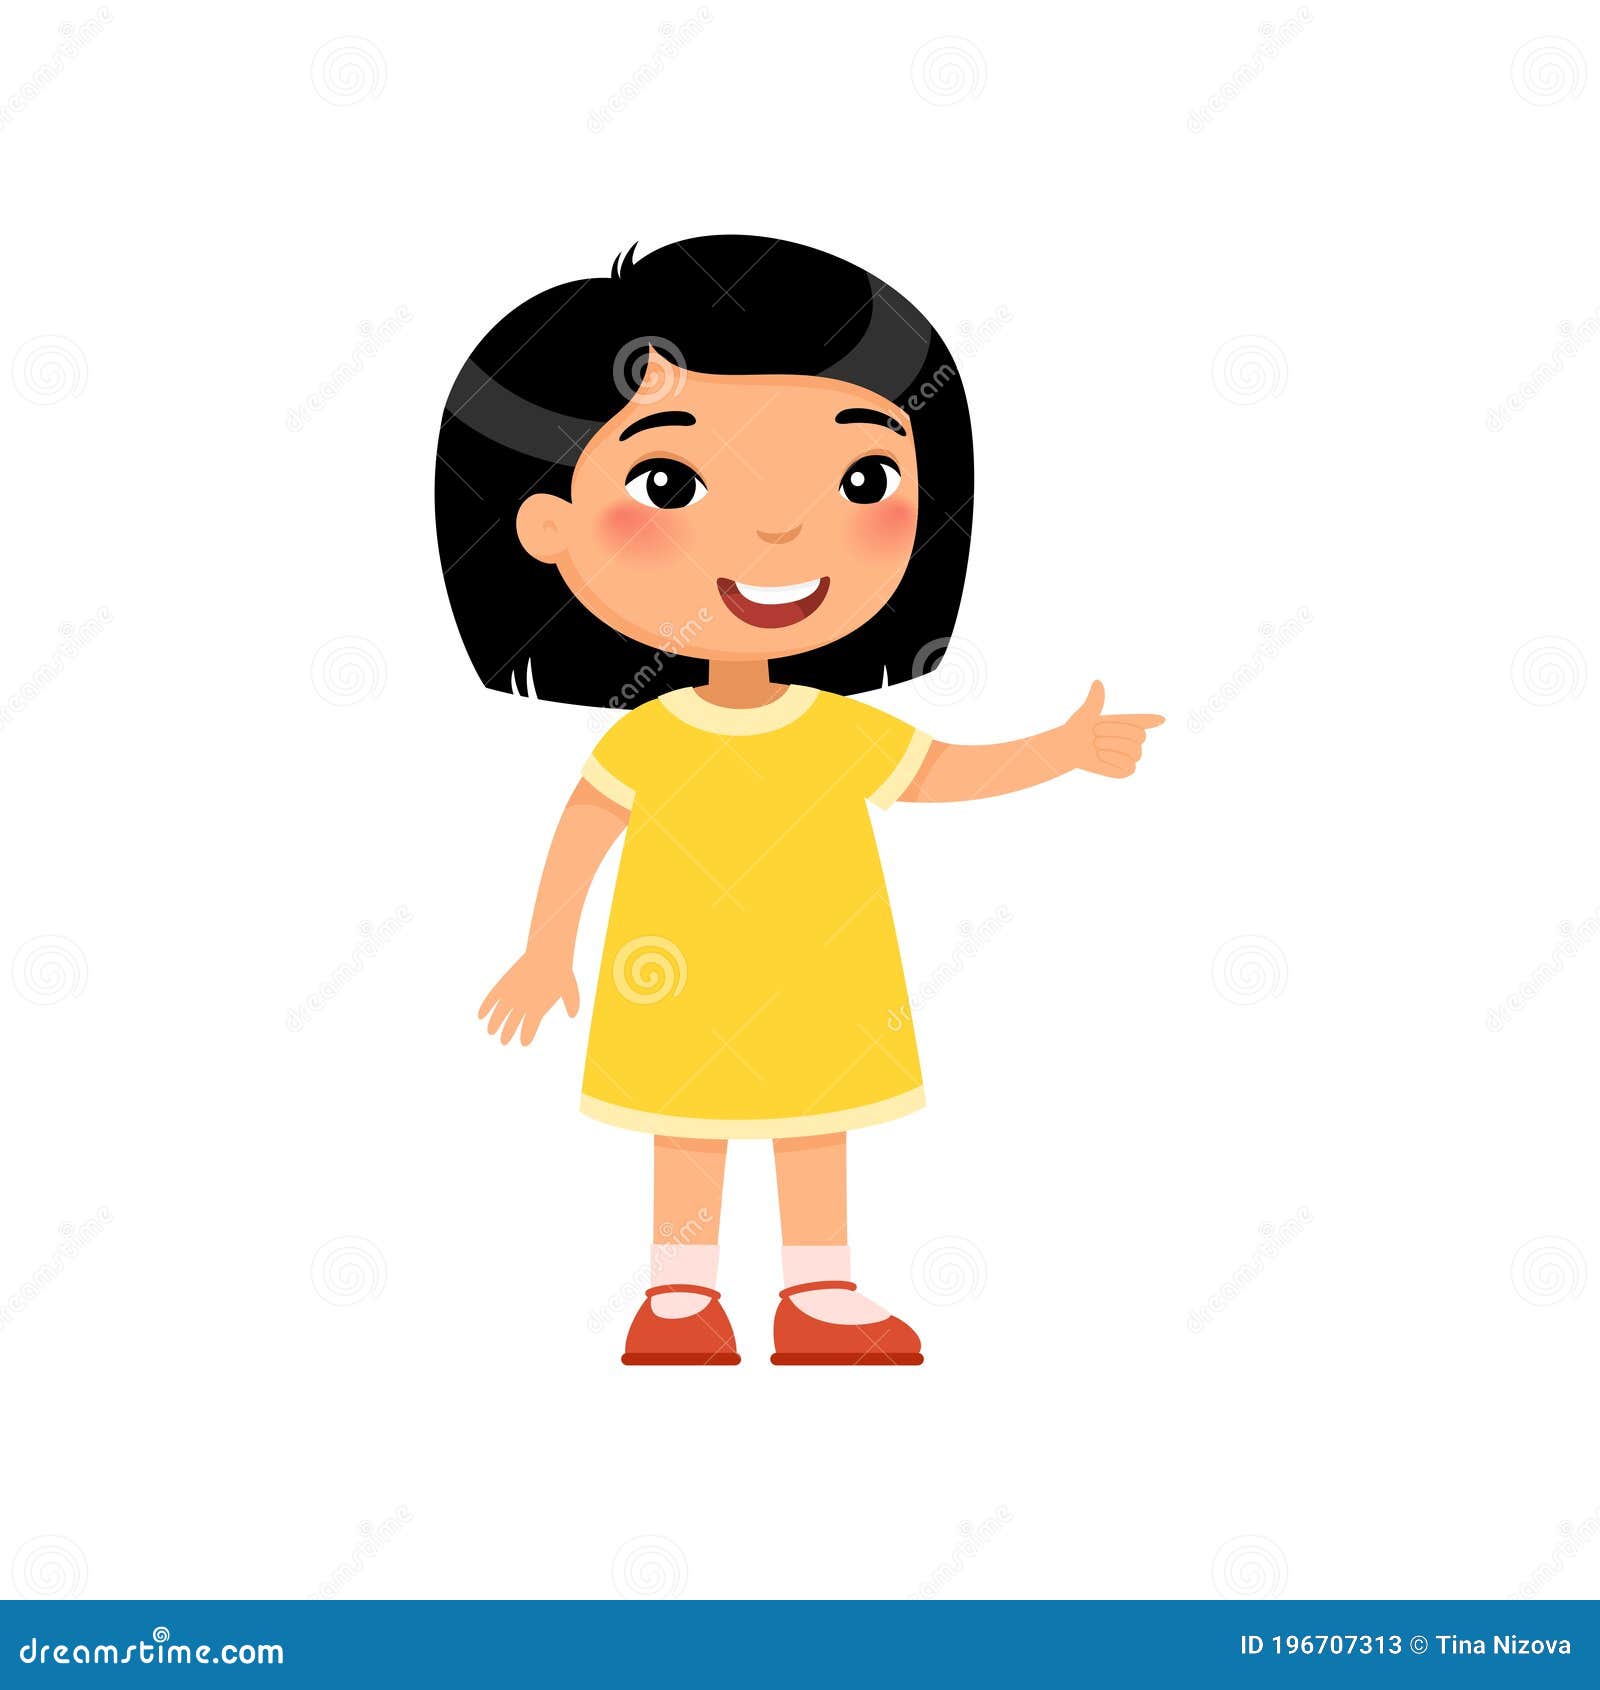 A little asian girl animated